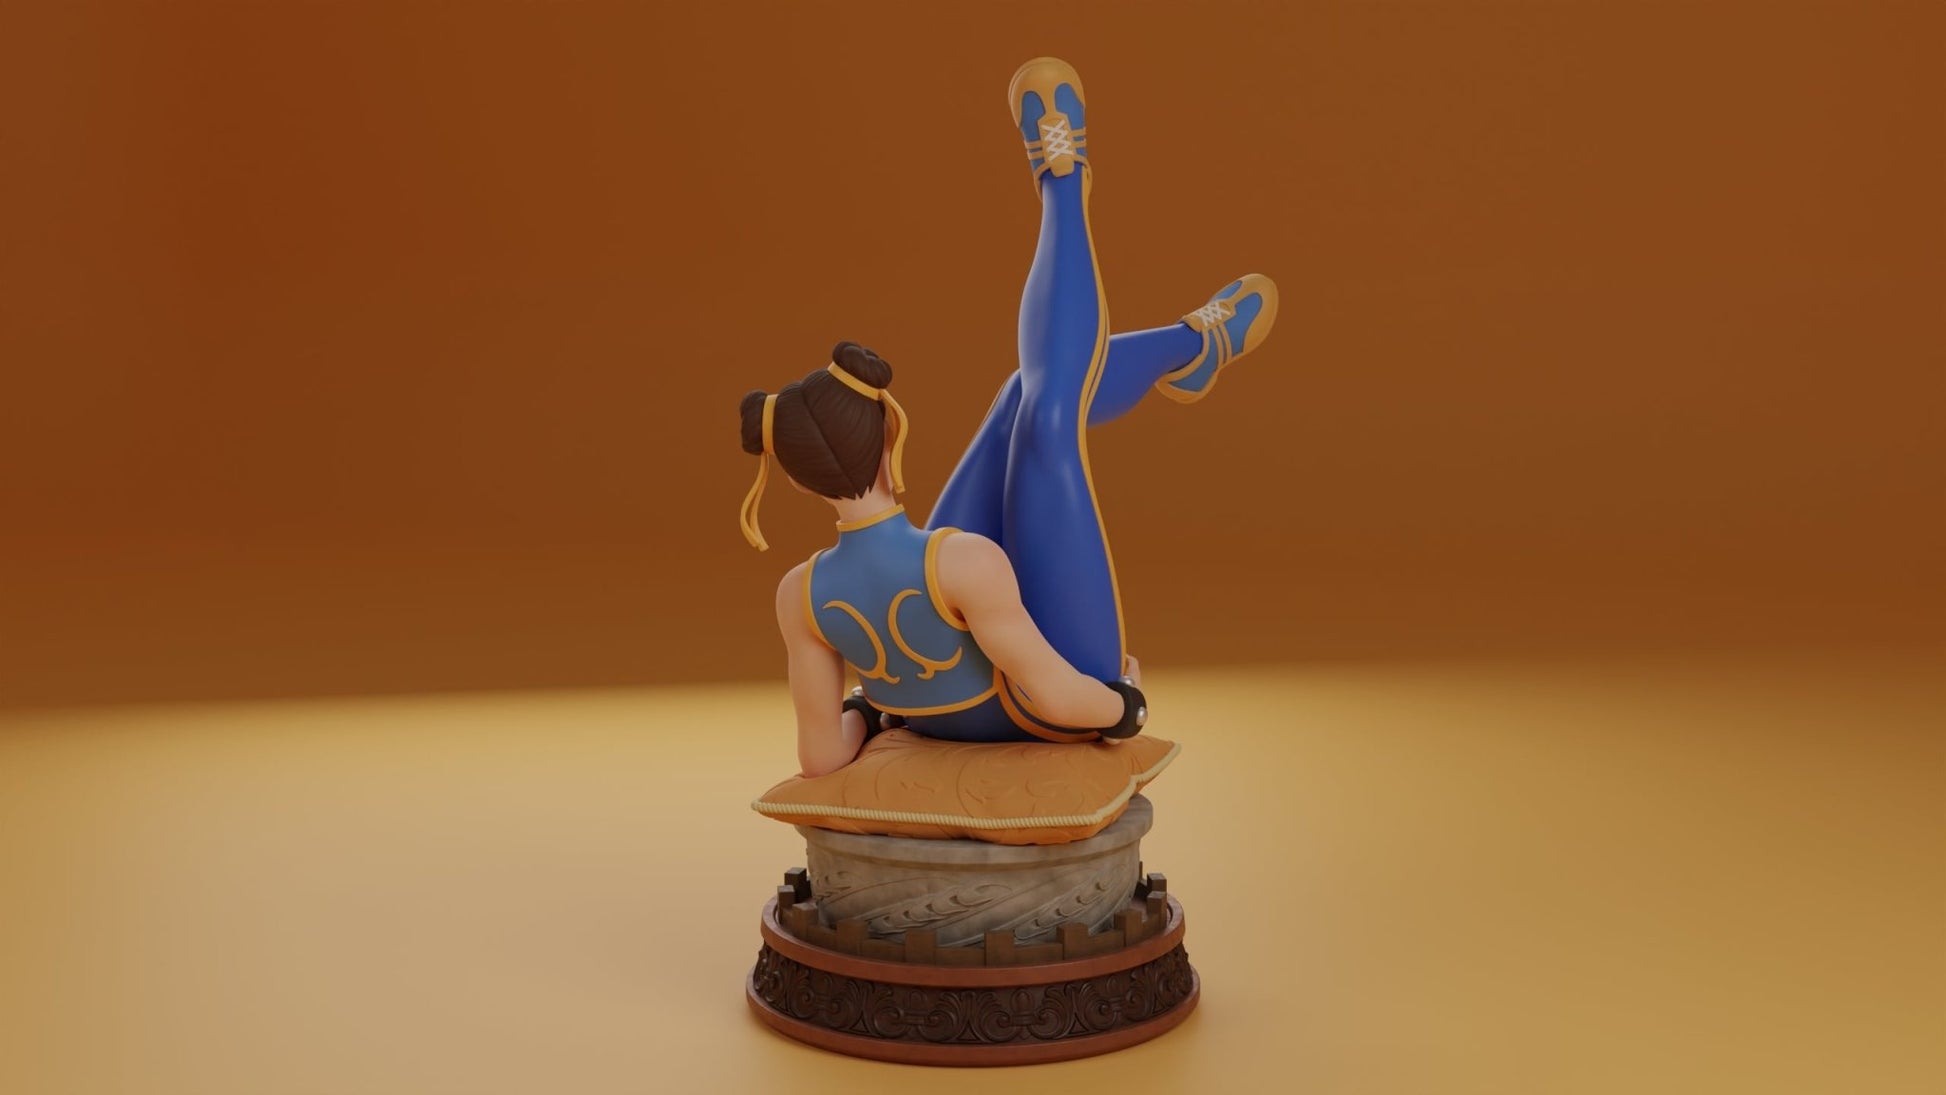 CHUN-LI 3D Printed Miniature | Fun Art | Figurine by Uroboros3D